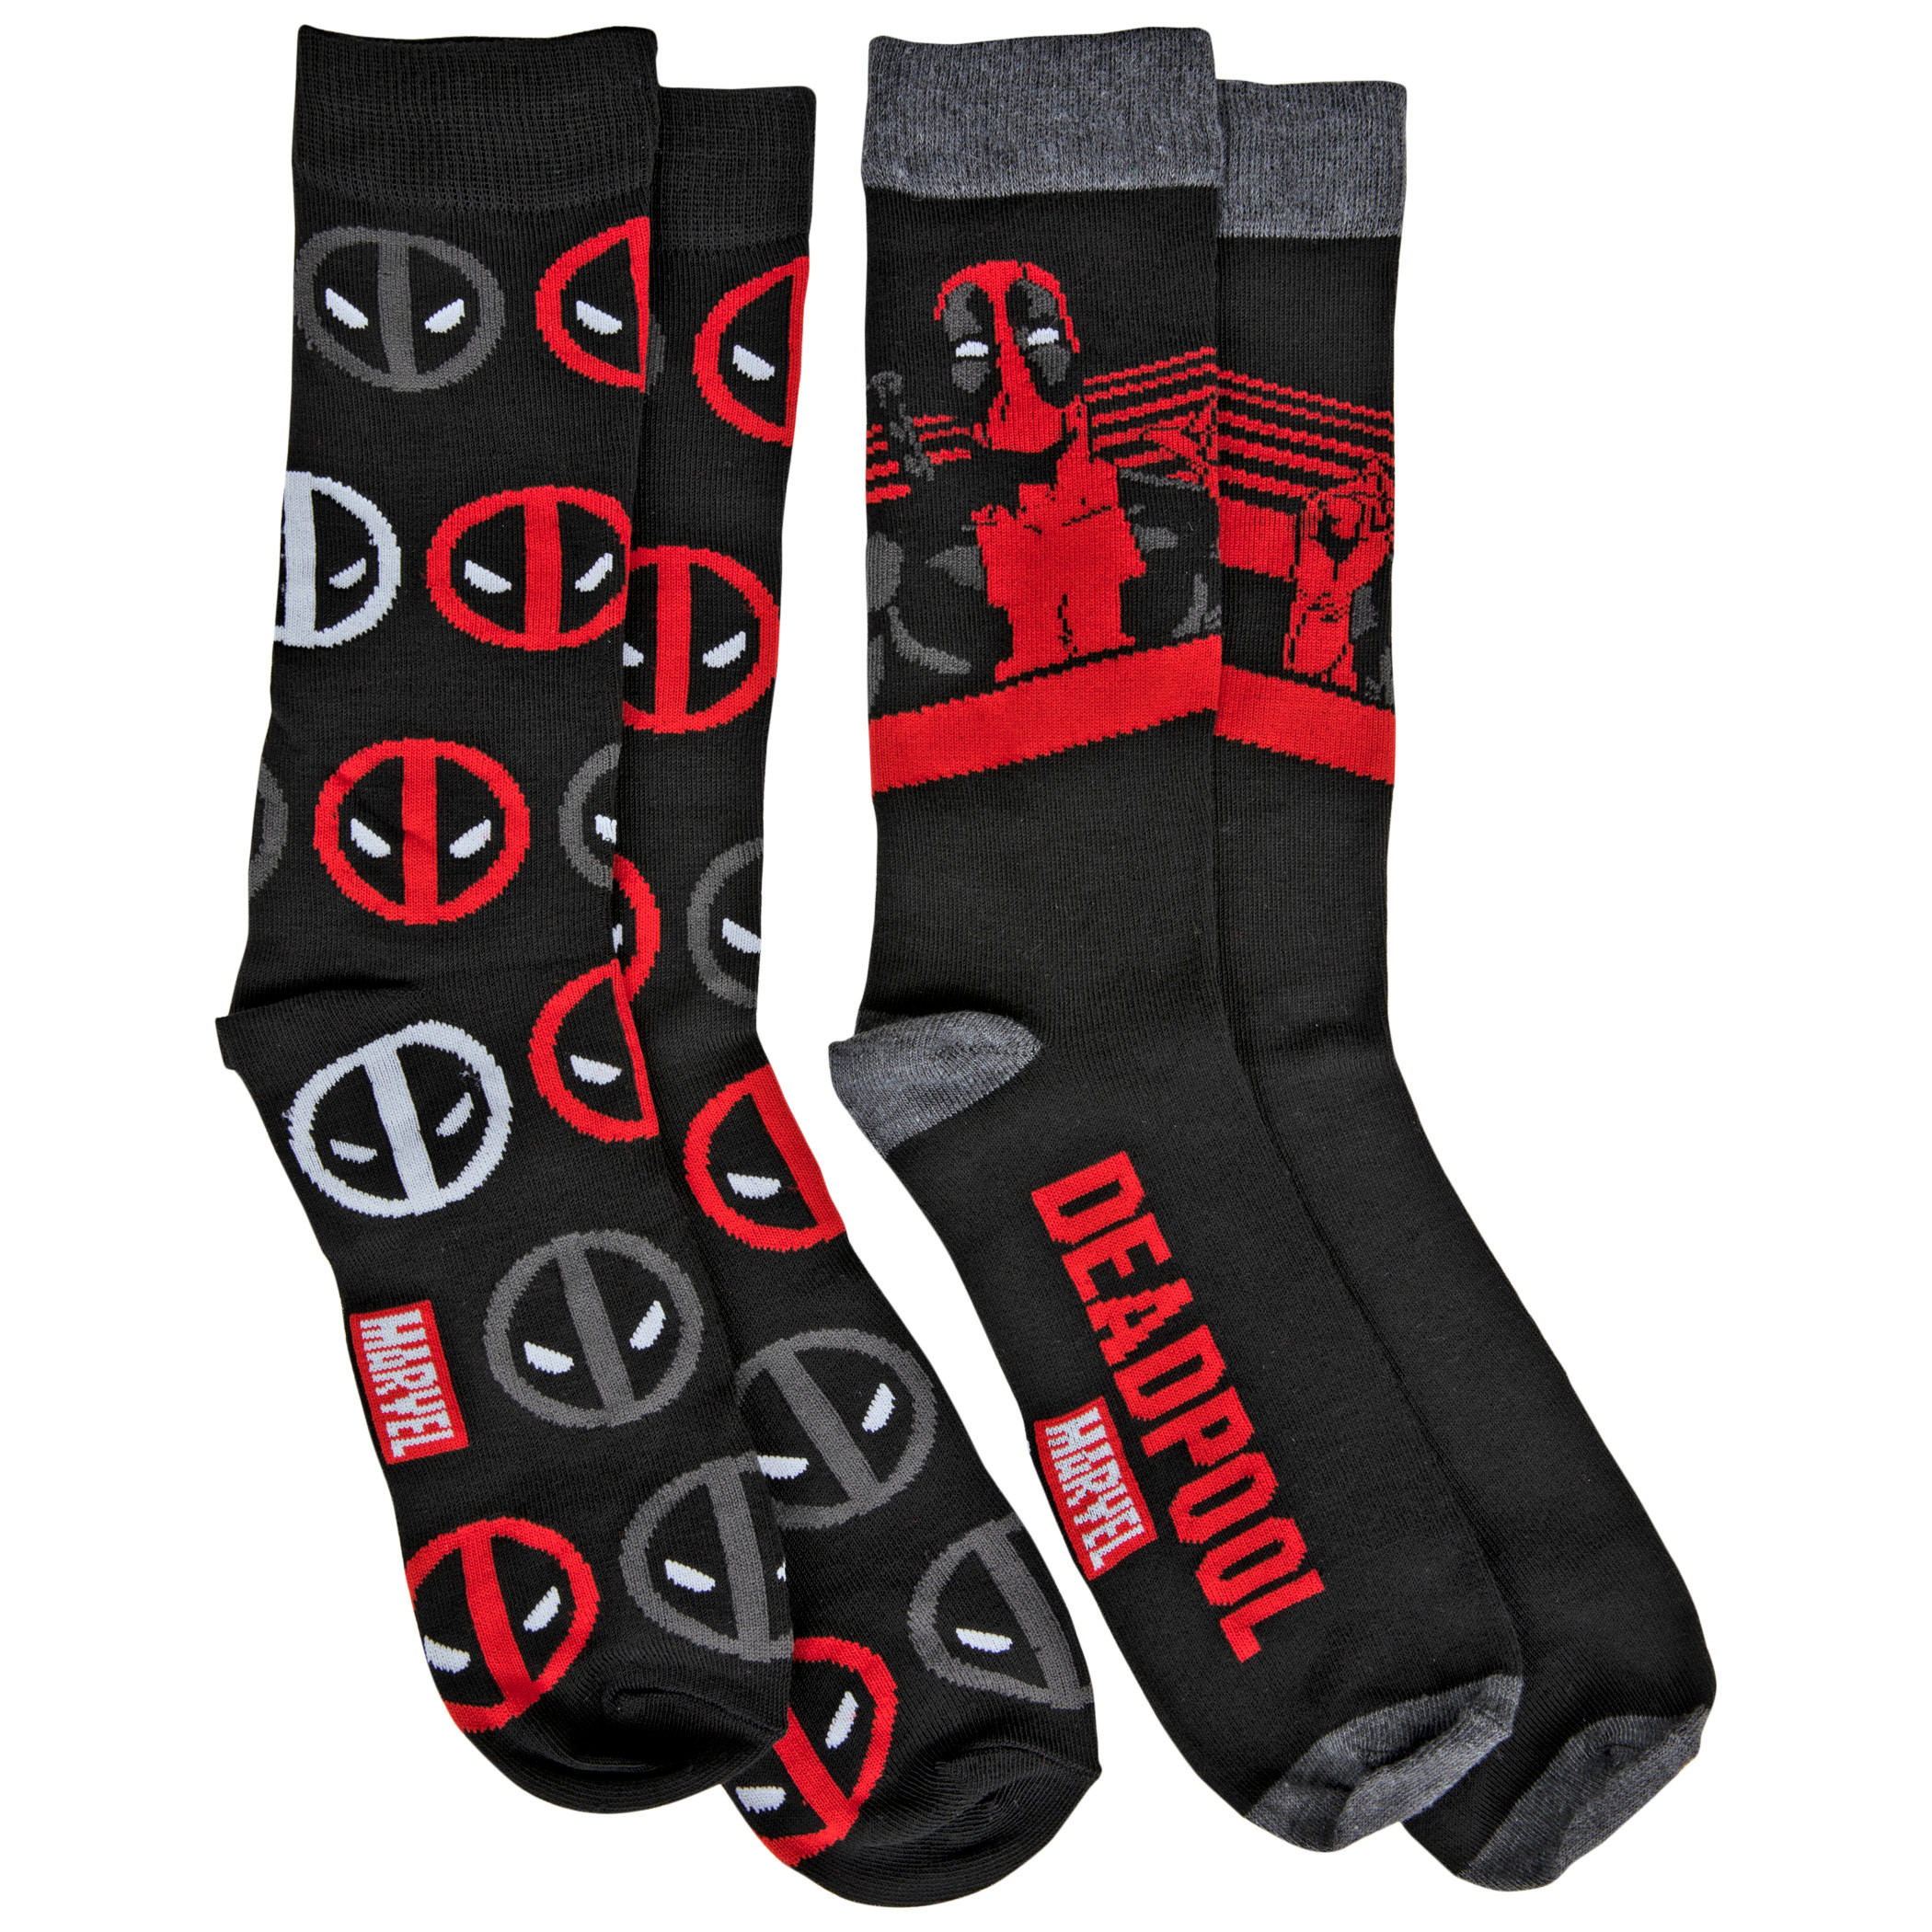 Deadpool Character and Repeating Logos 2-Pair Pack of Casual Crew Socks